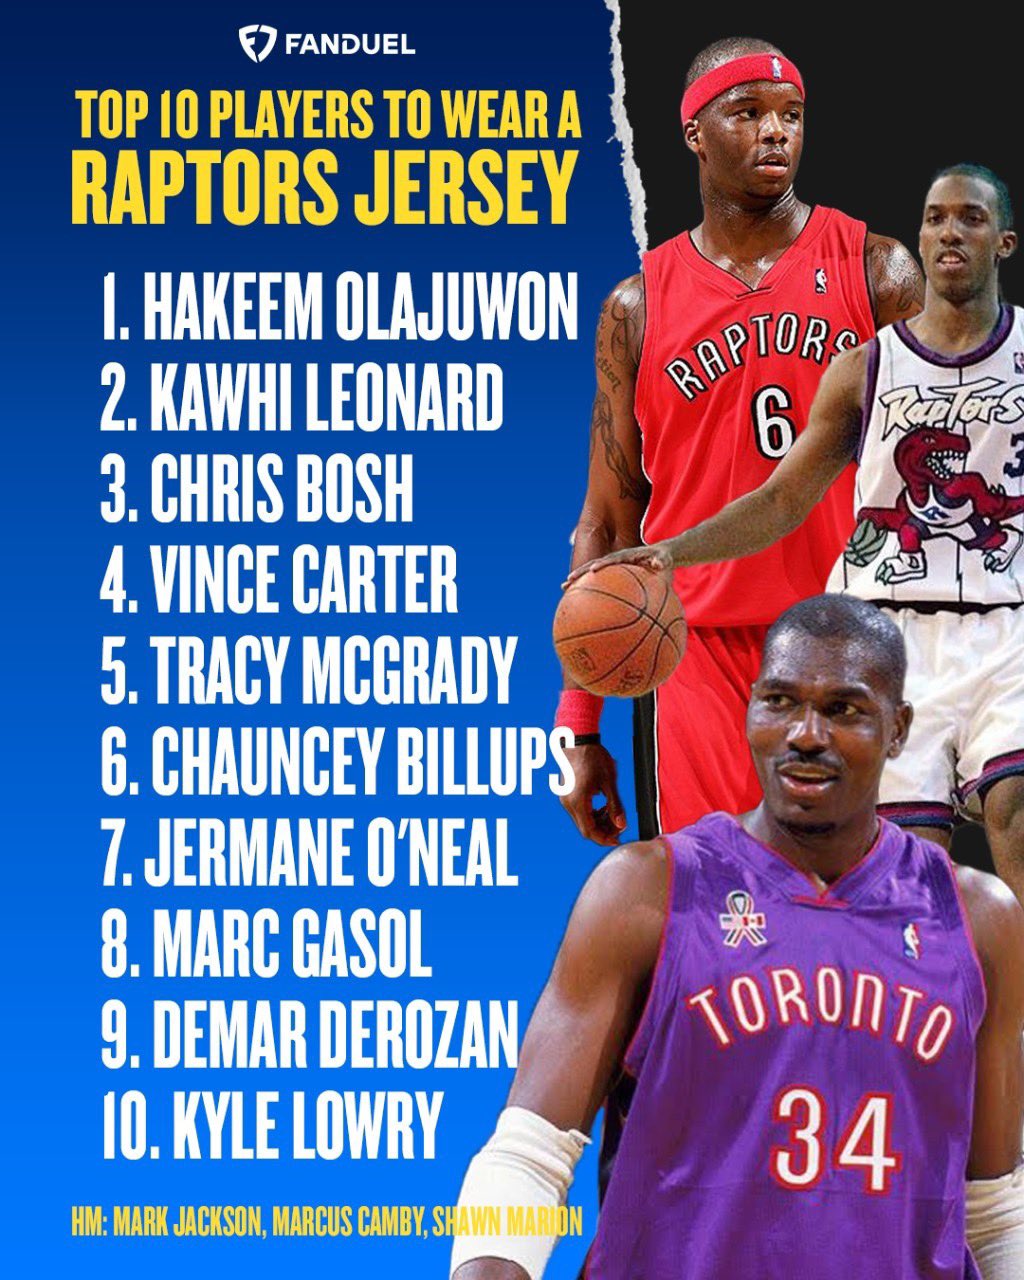 Toronto Raptors Kawhi Leonard Jersey (5)